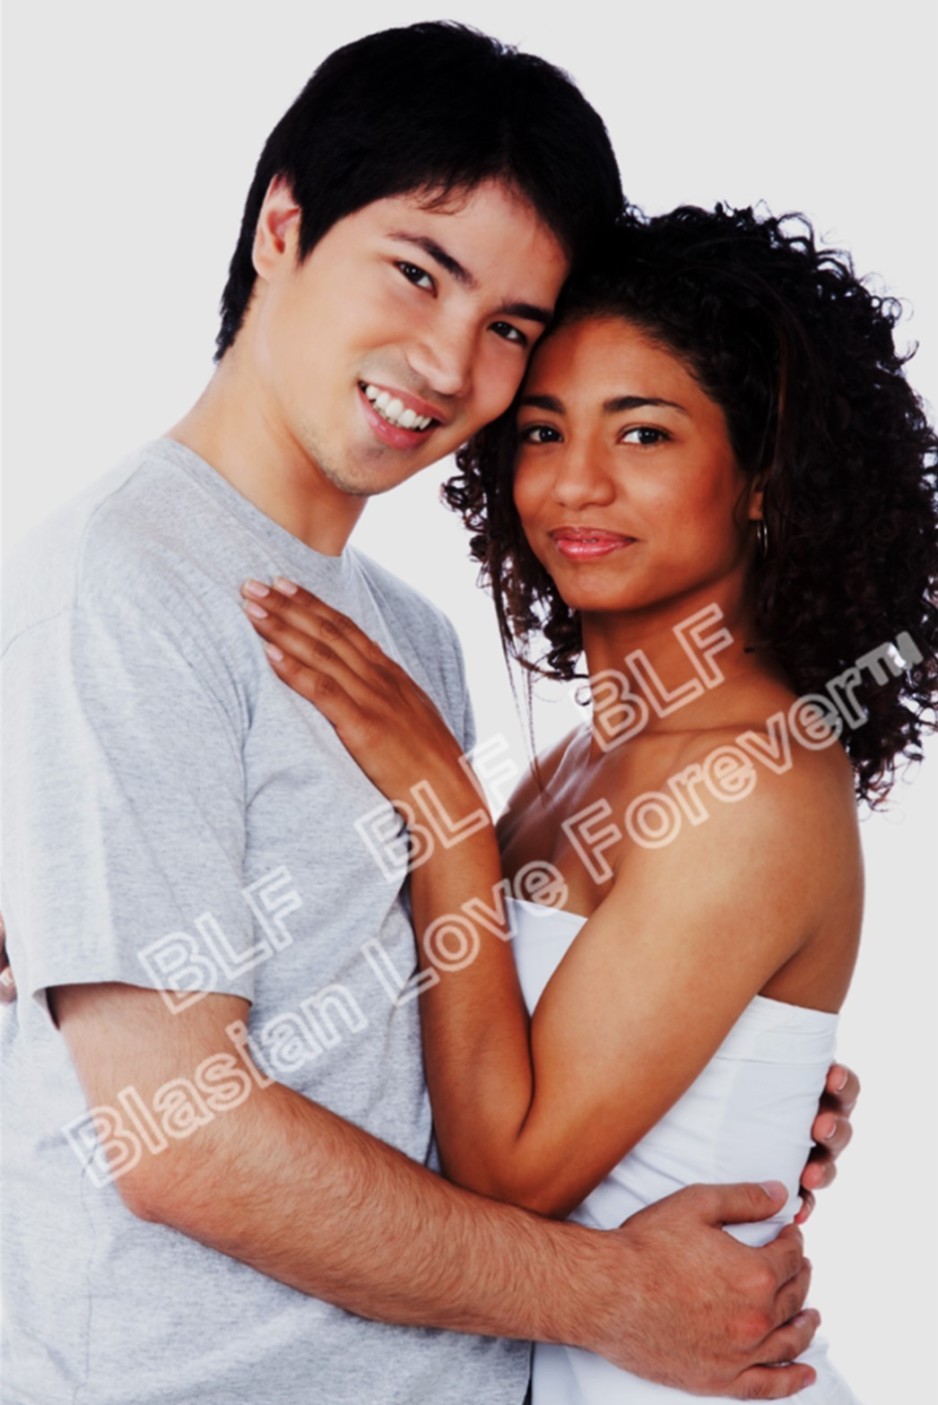 AMBW, Asian Men and Black Women, AMBW Couple